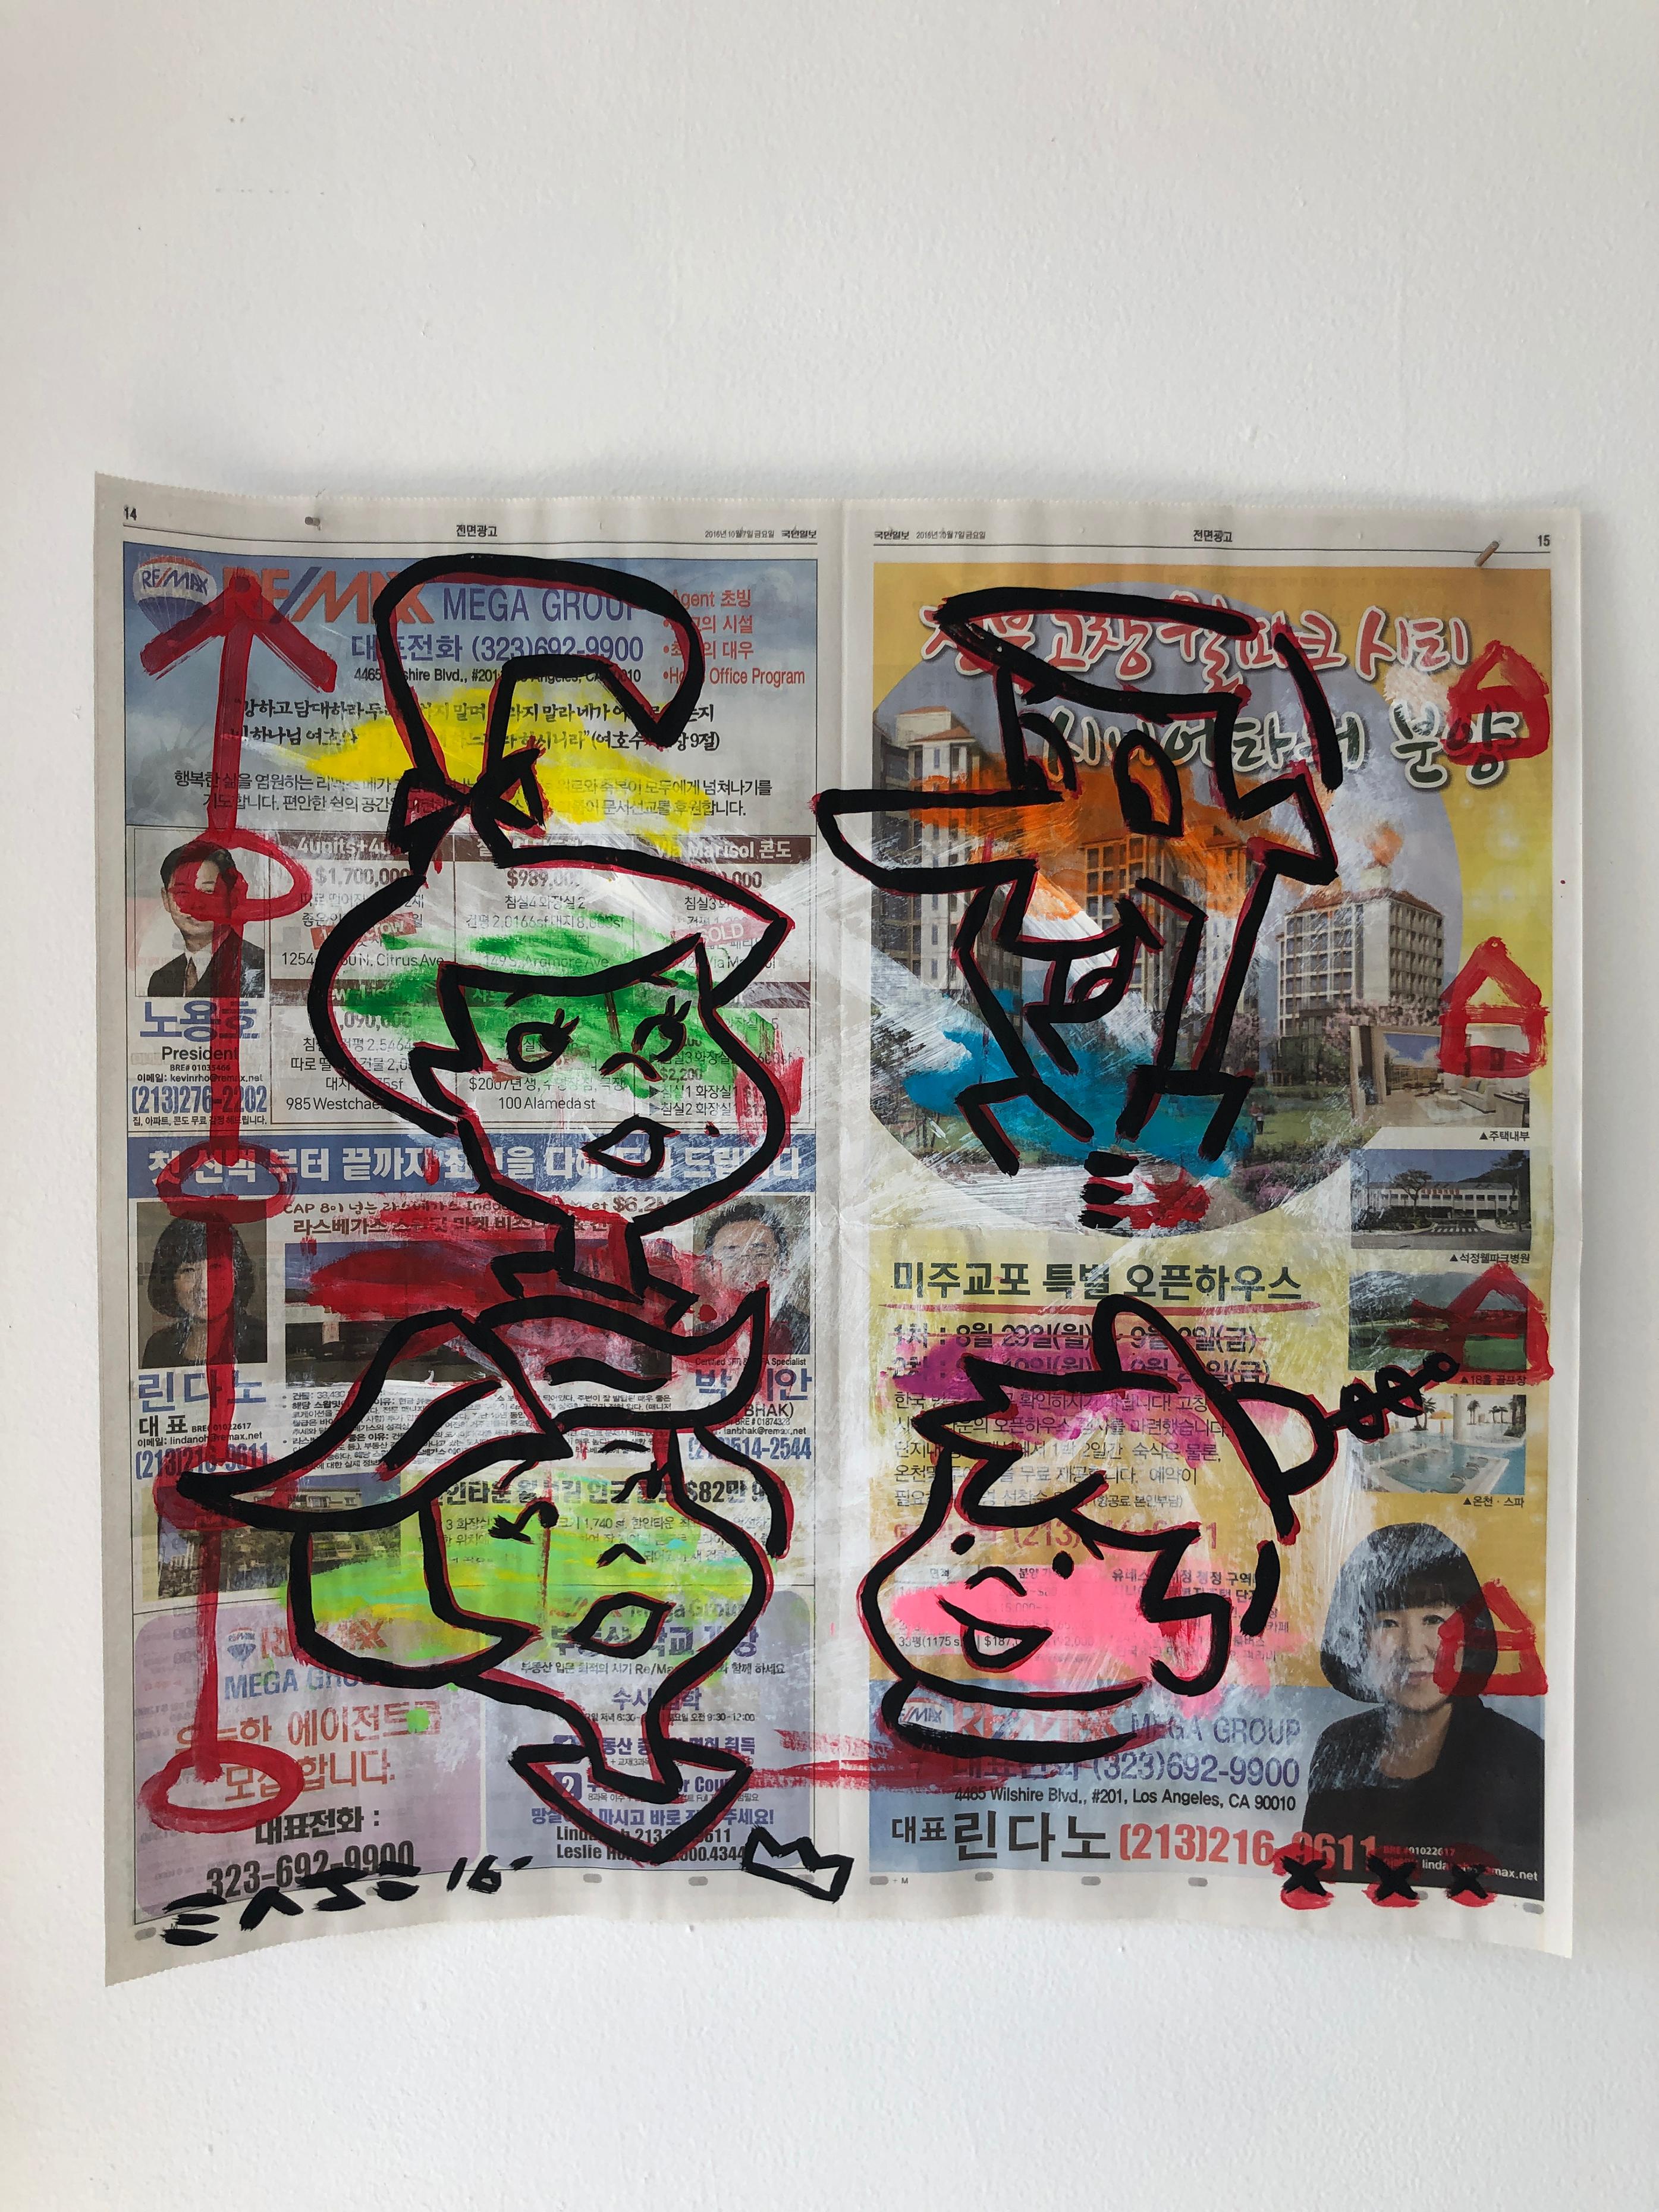 Gary John Figurative Print - "Jetson Family" Acrylic and Collage on Korean newsprint